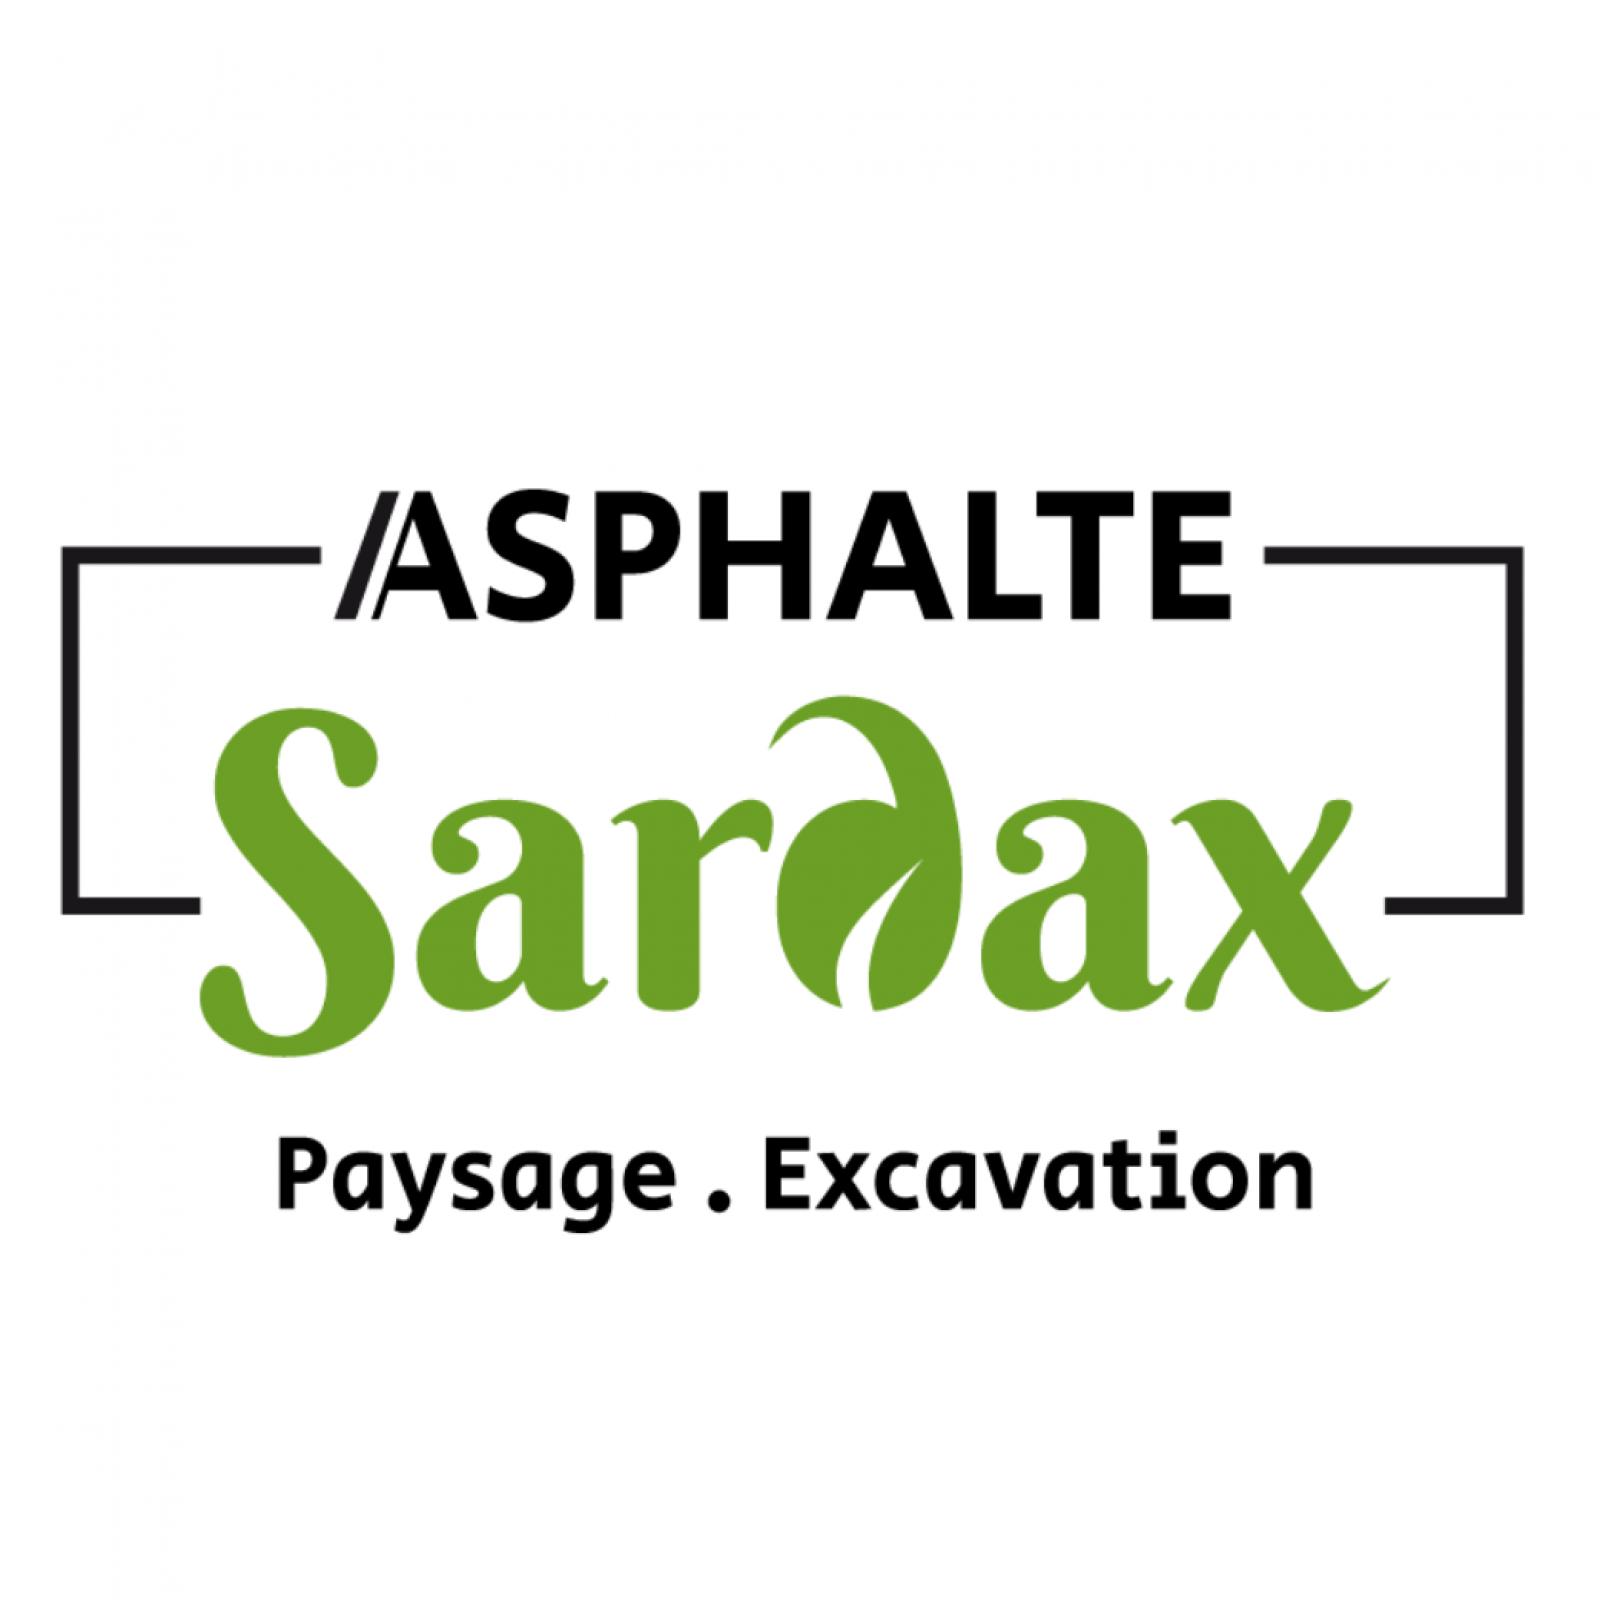 Asphalte Sardax Logo